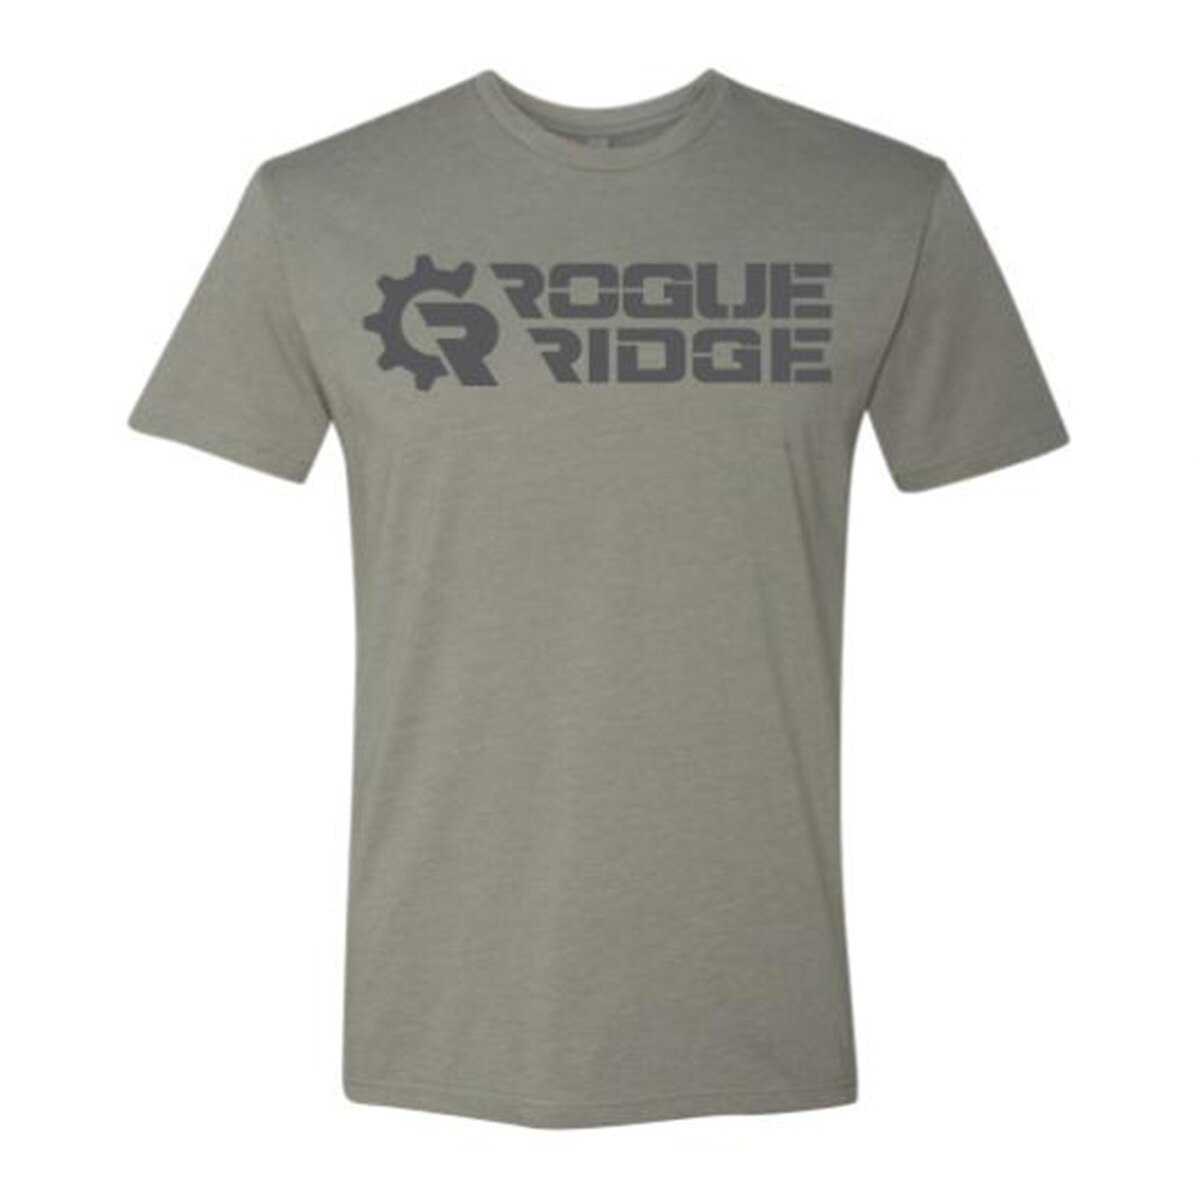 rogue ridge logo grey shirt